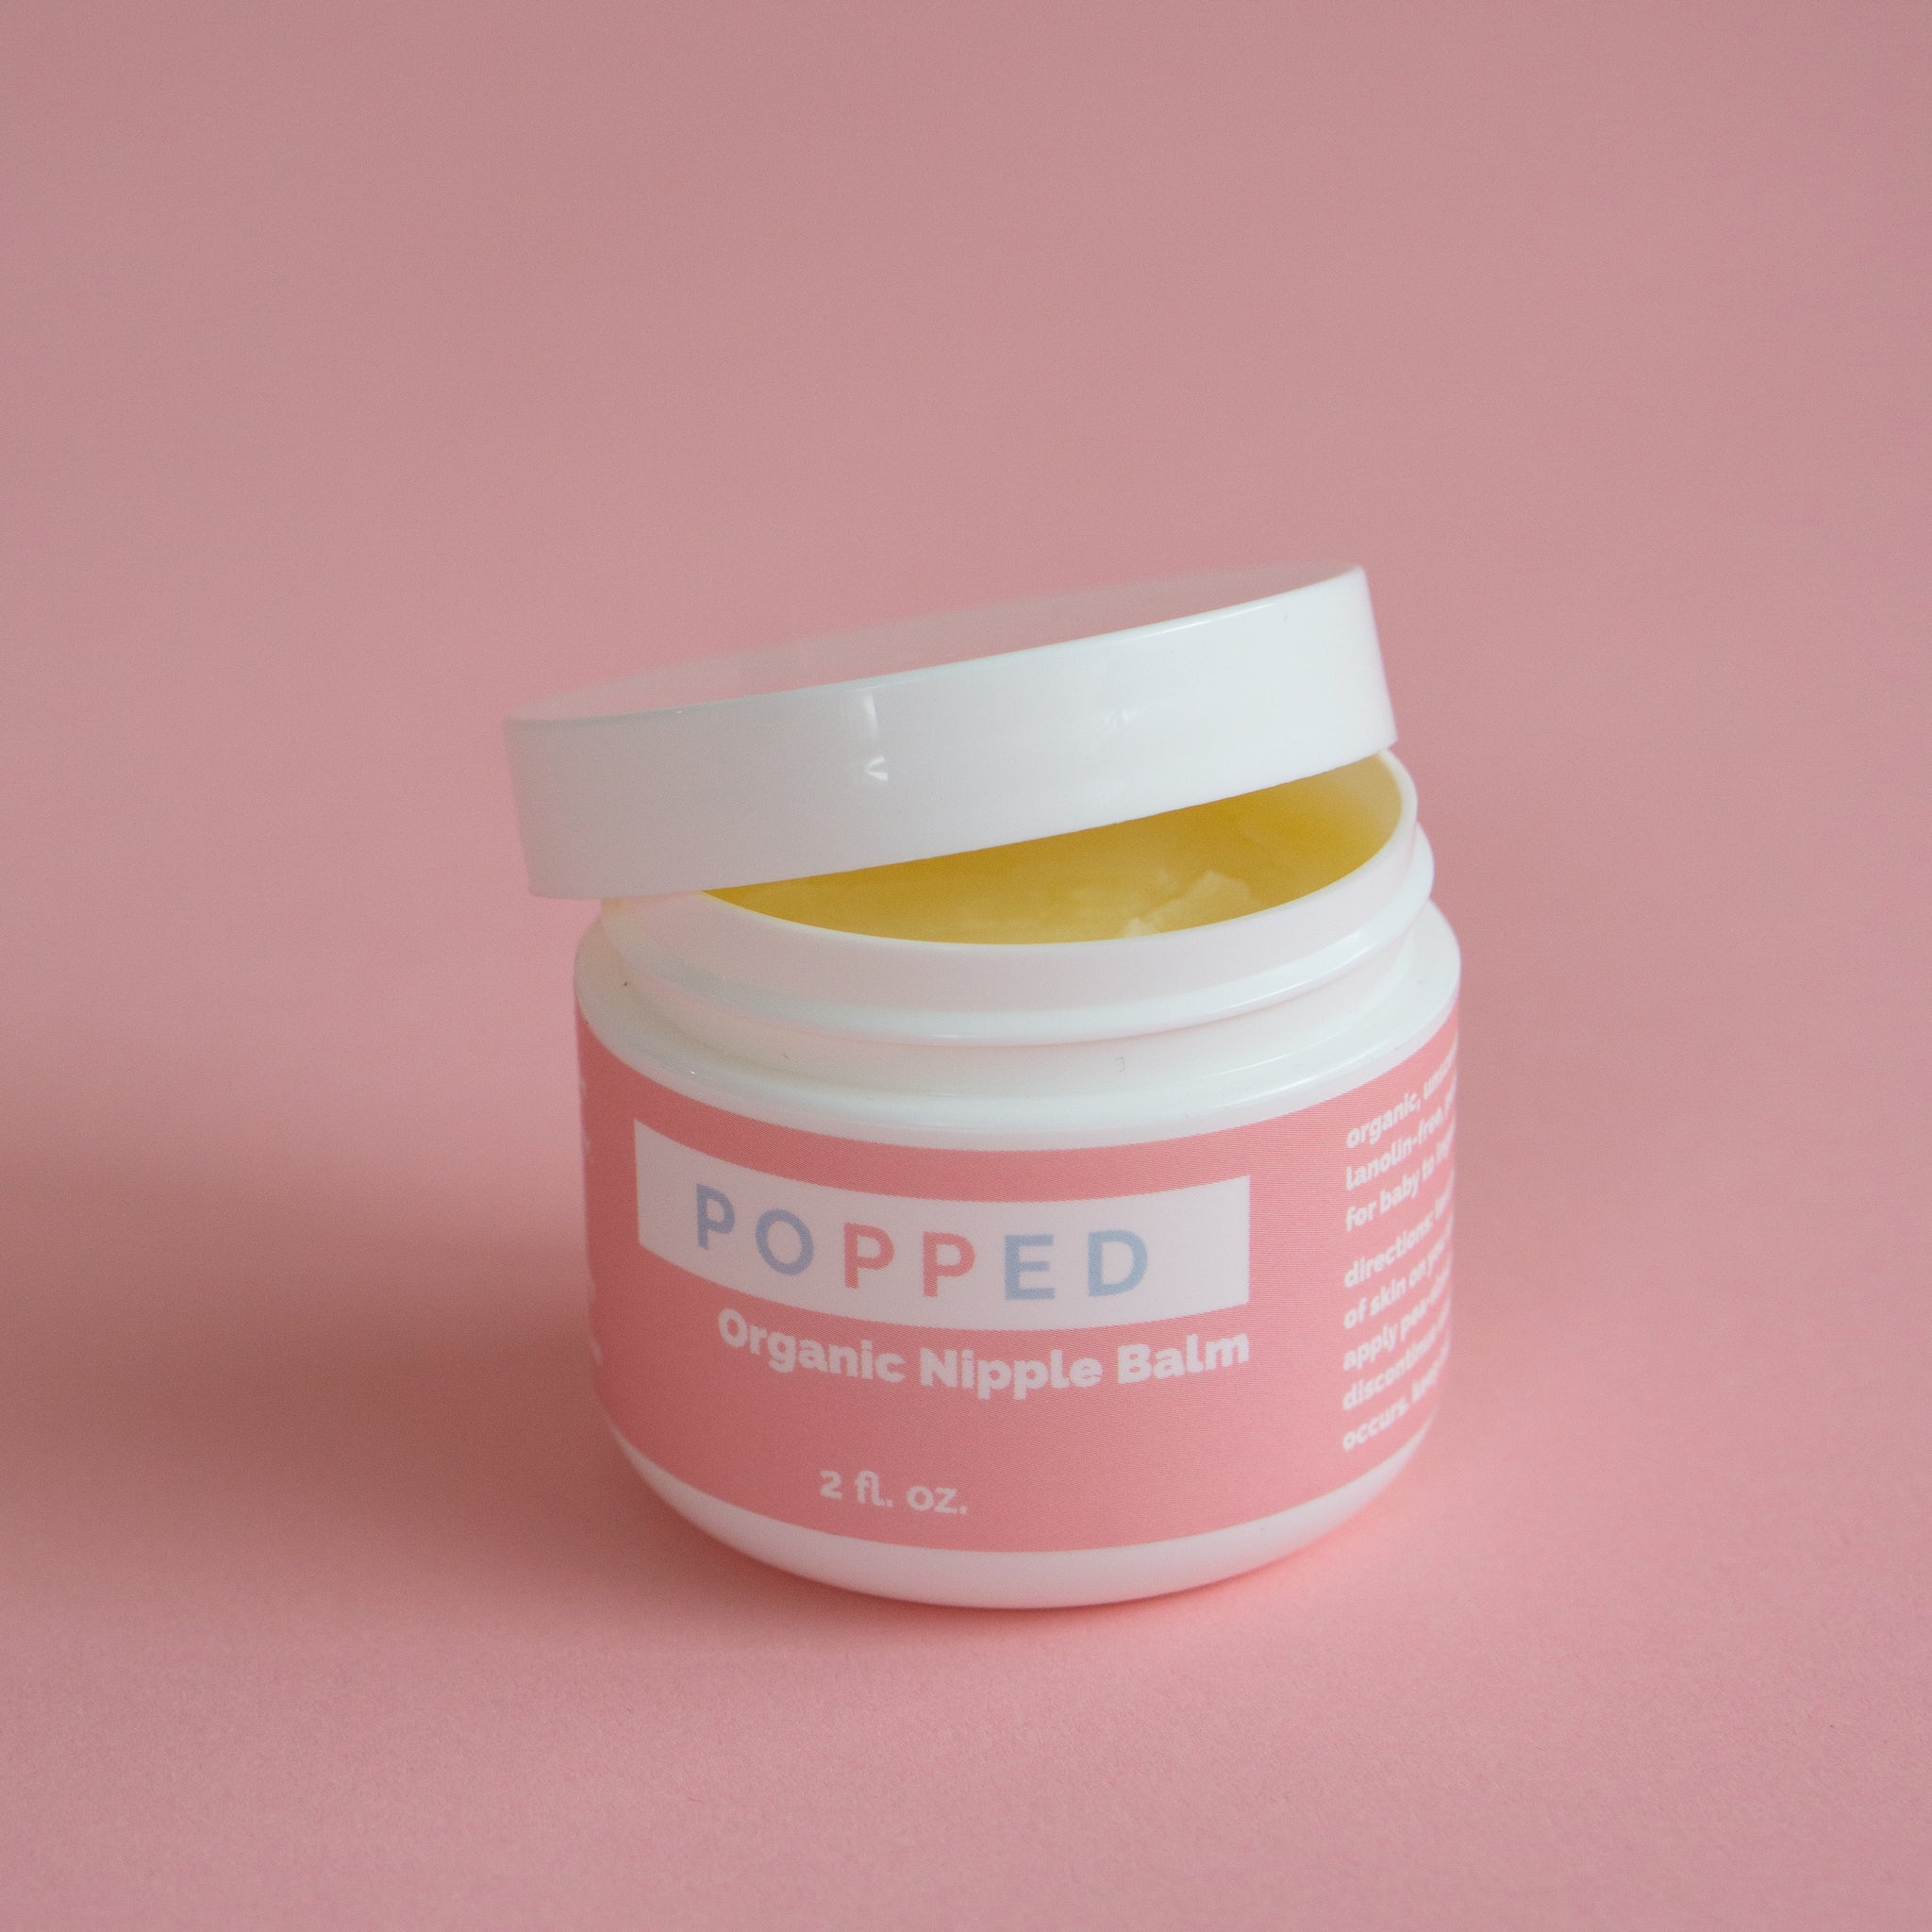 Organic Nipple Balm – The Popped Shop